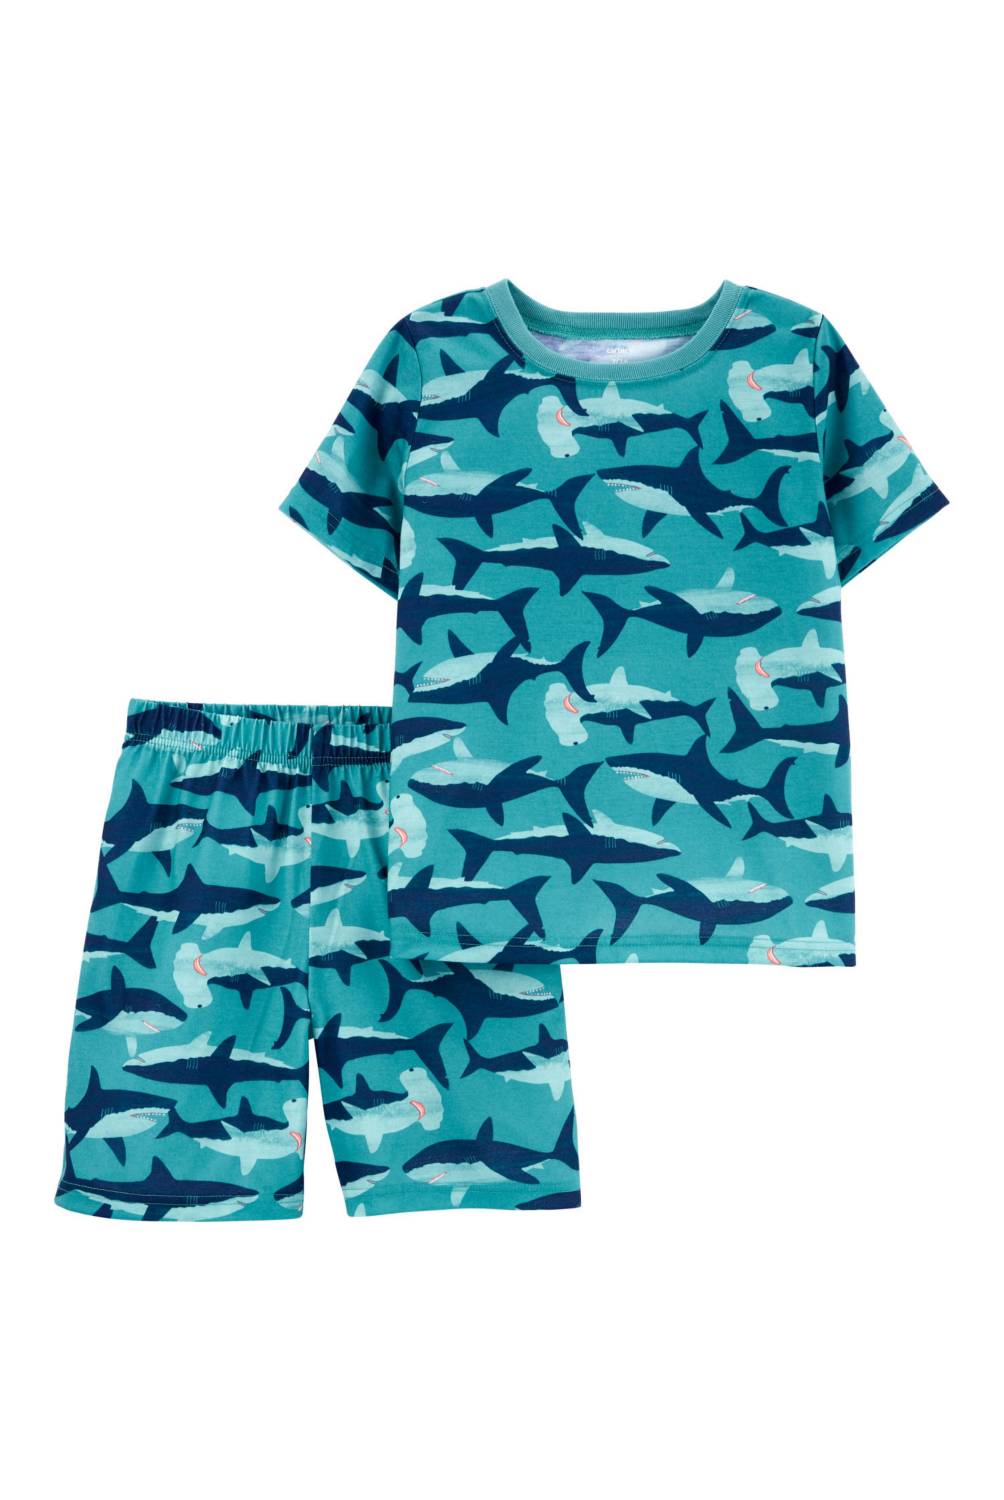 Pijama de tiburón de manga corta para niños